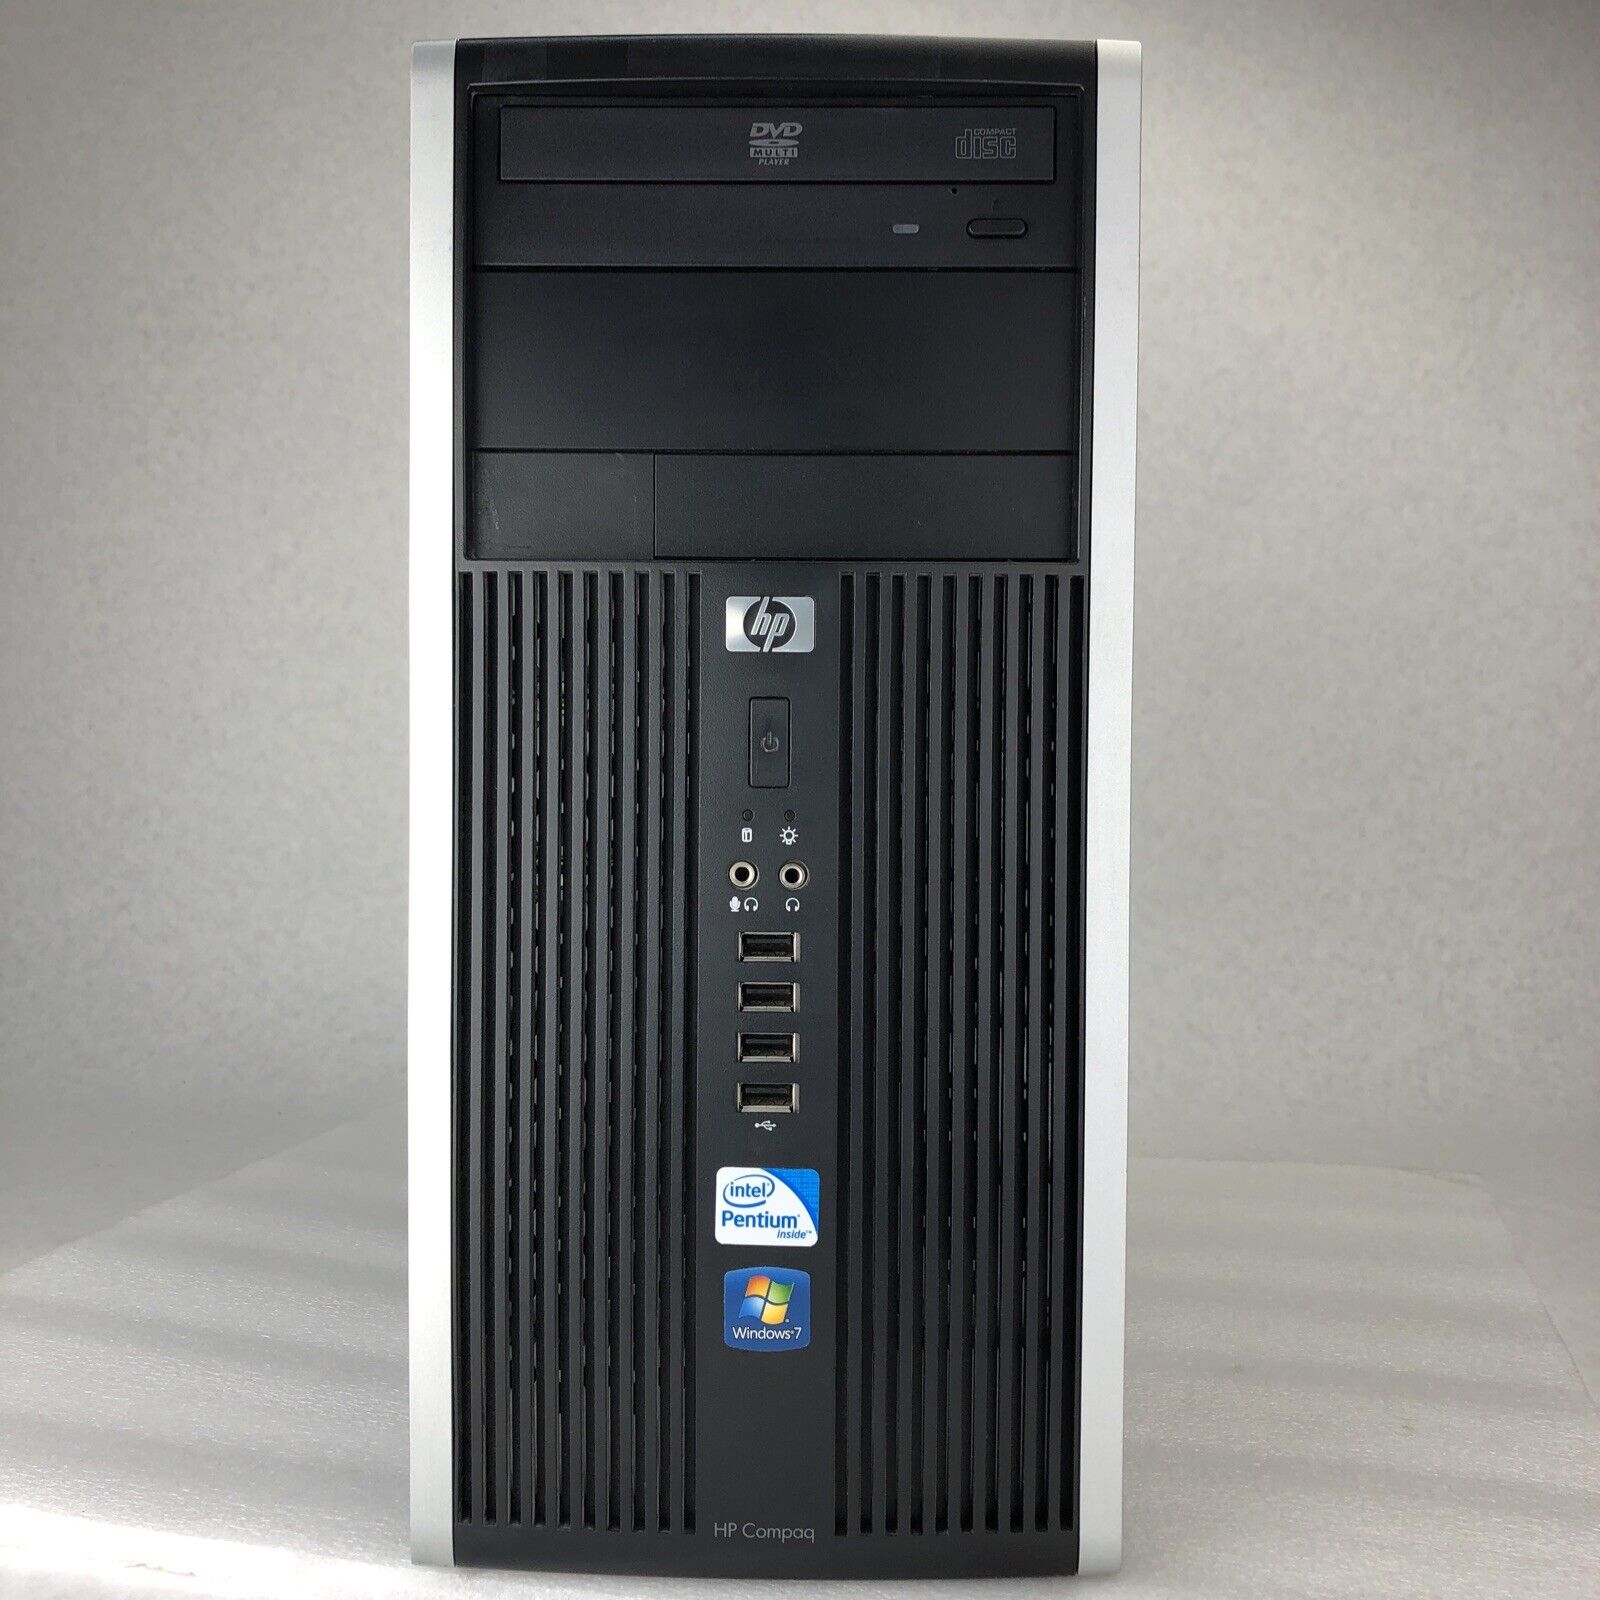 HP Compaq 6000 Pro MT Pentium D E6600 3.06GHz CPU 4GB RAM No HDD No OS